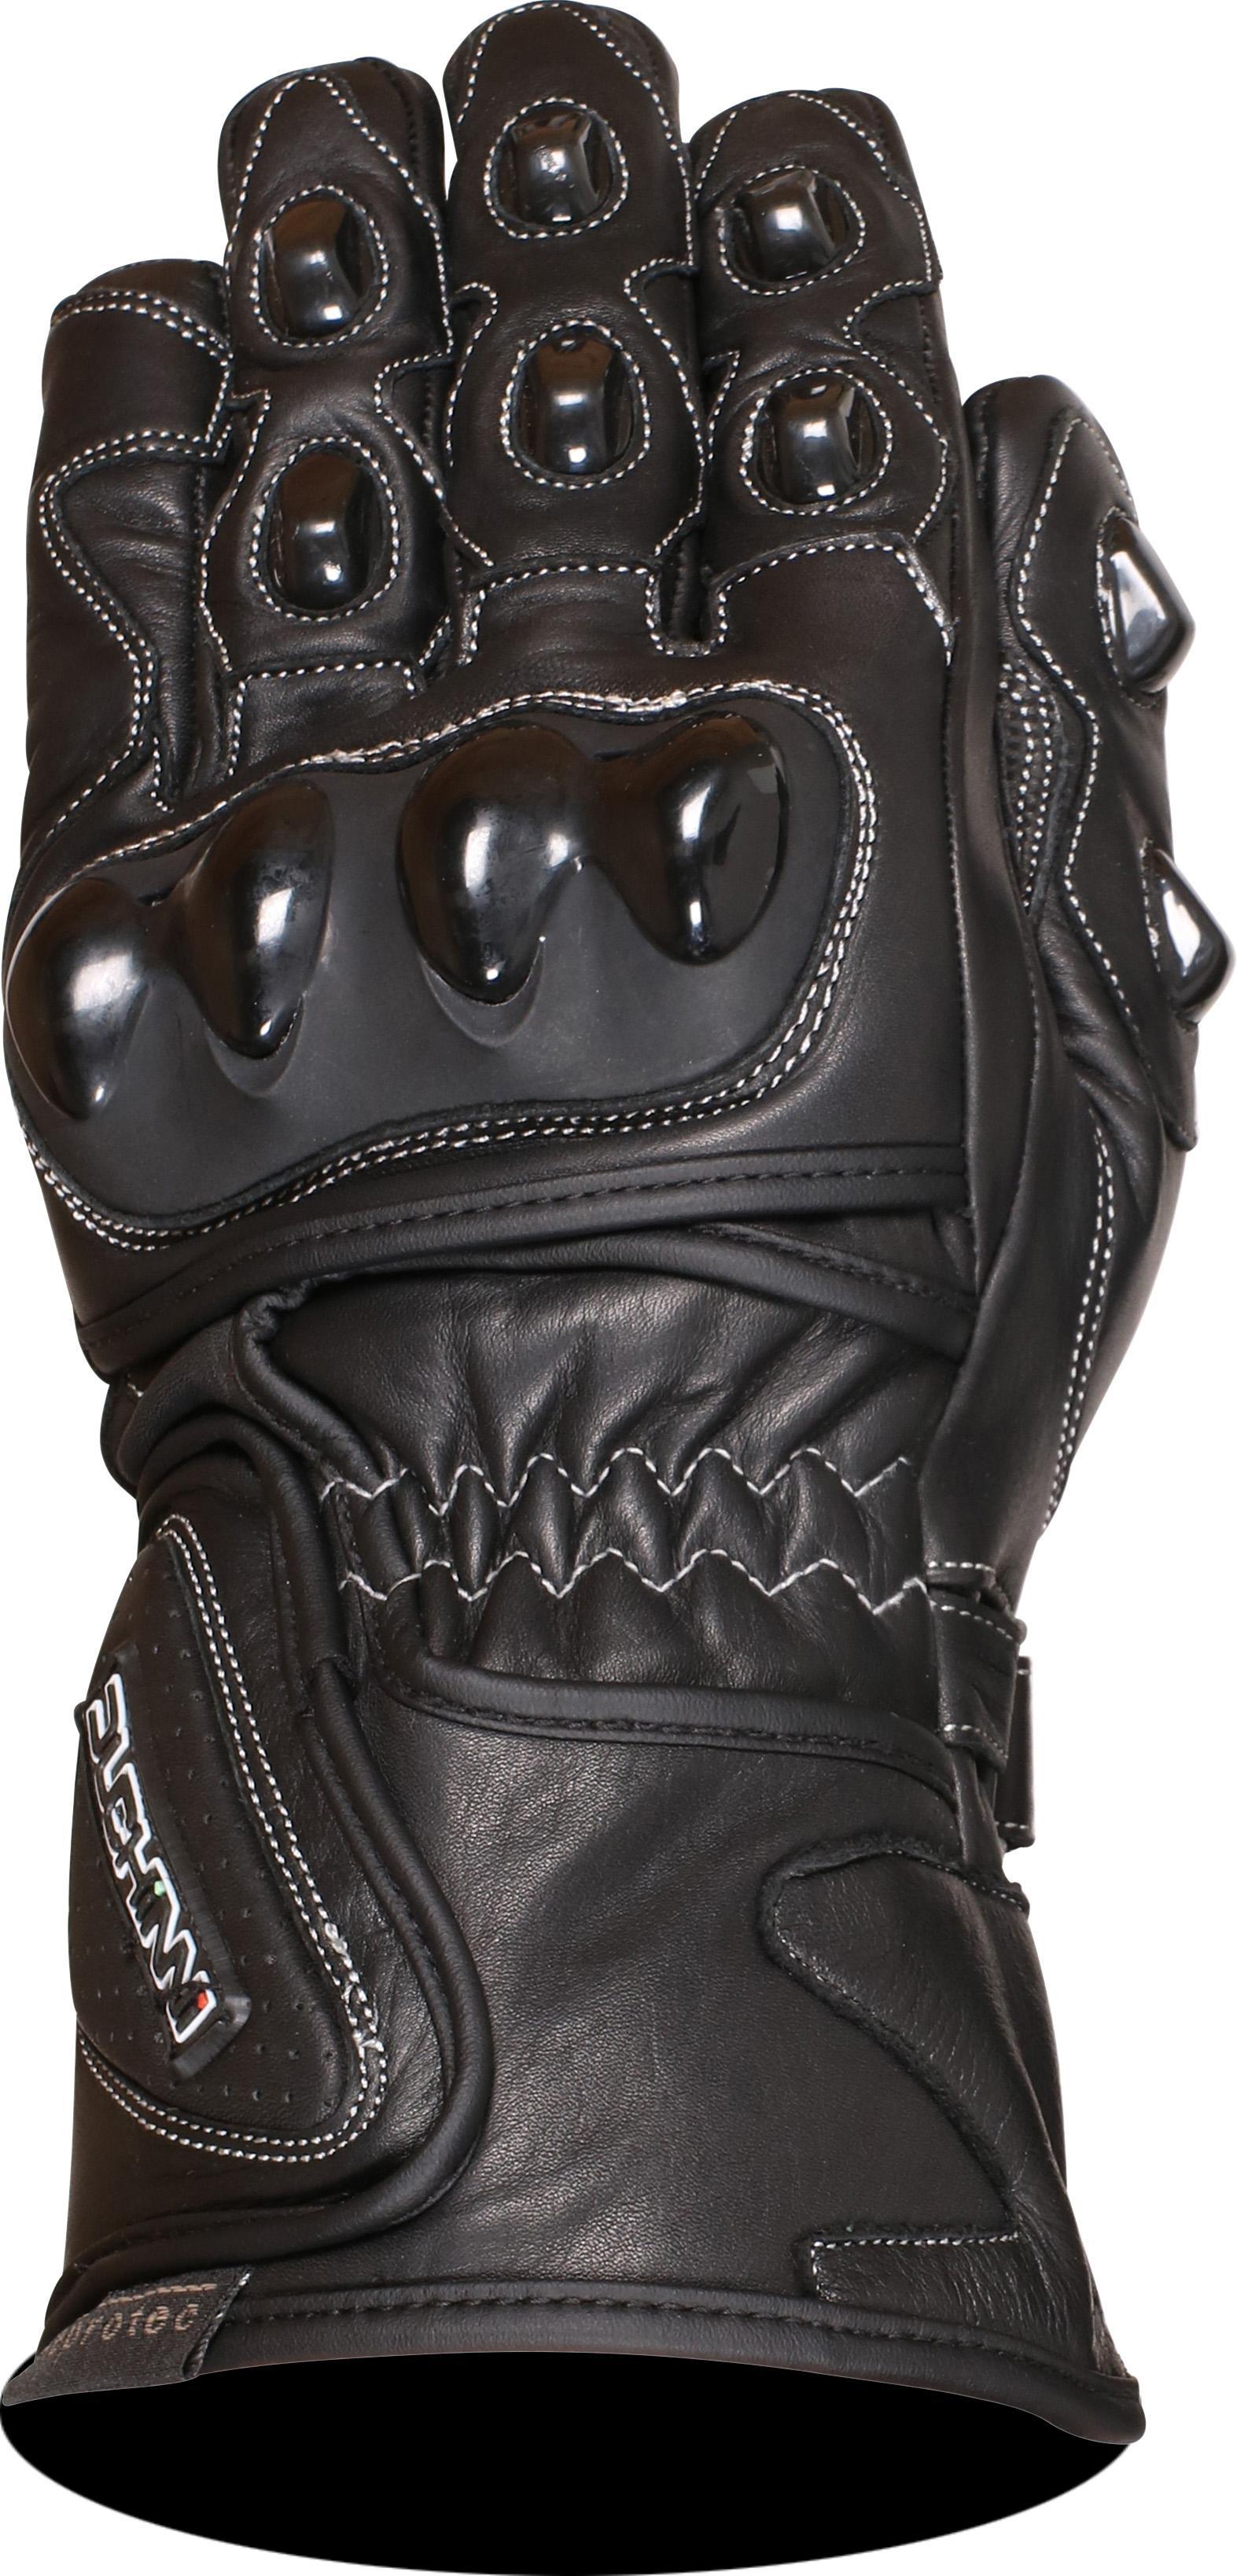 Duchinni Dr1 Motorcycle Gloves - Black, 3Xl